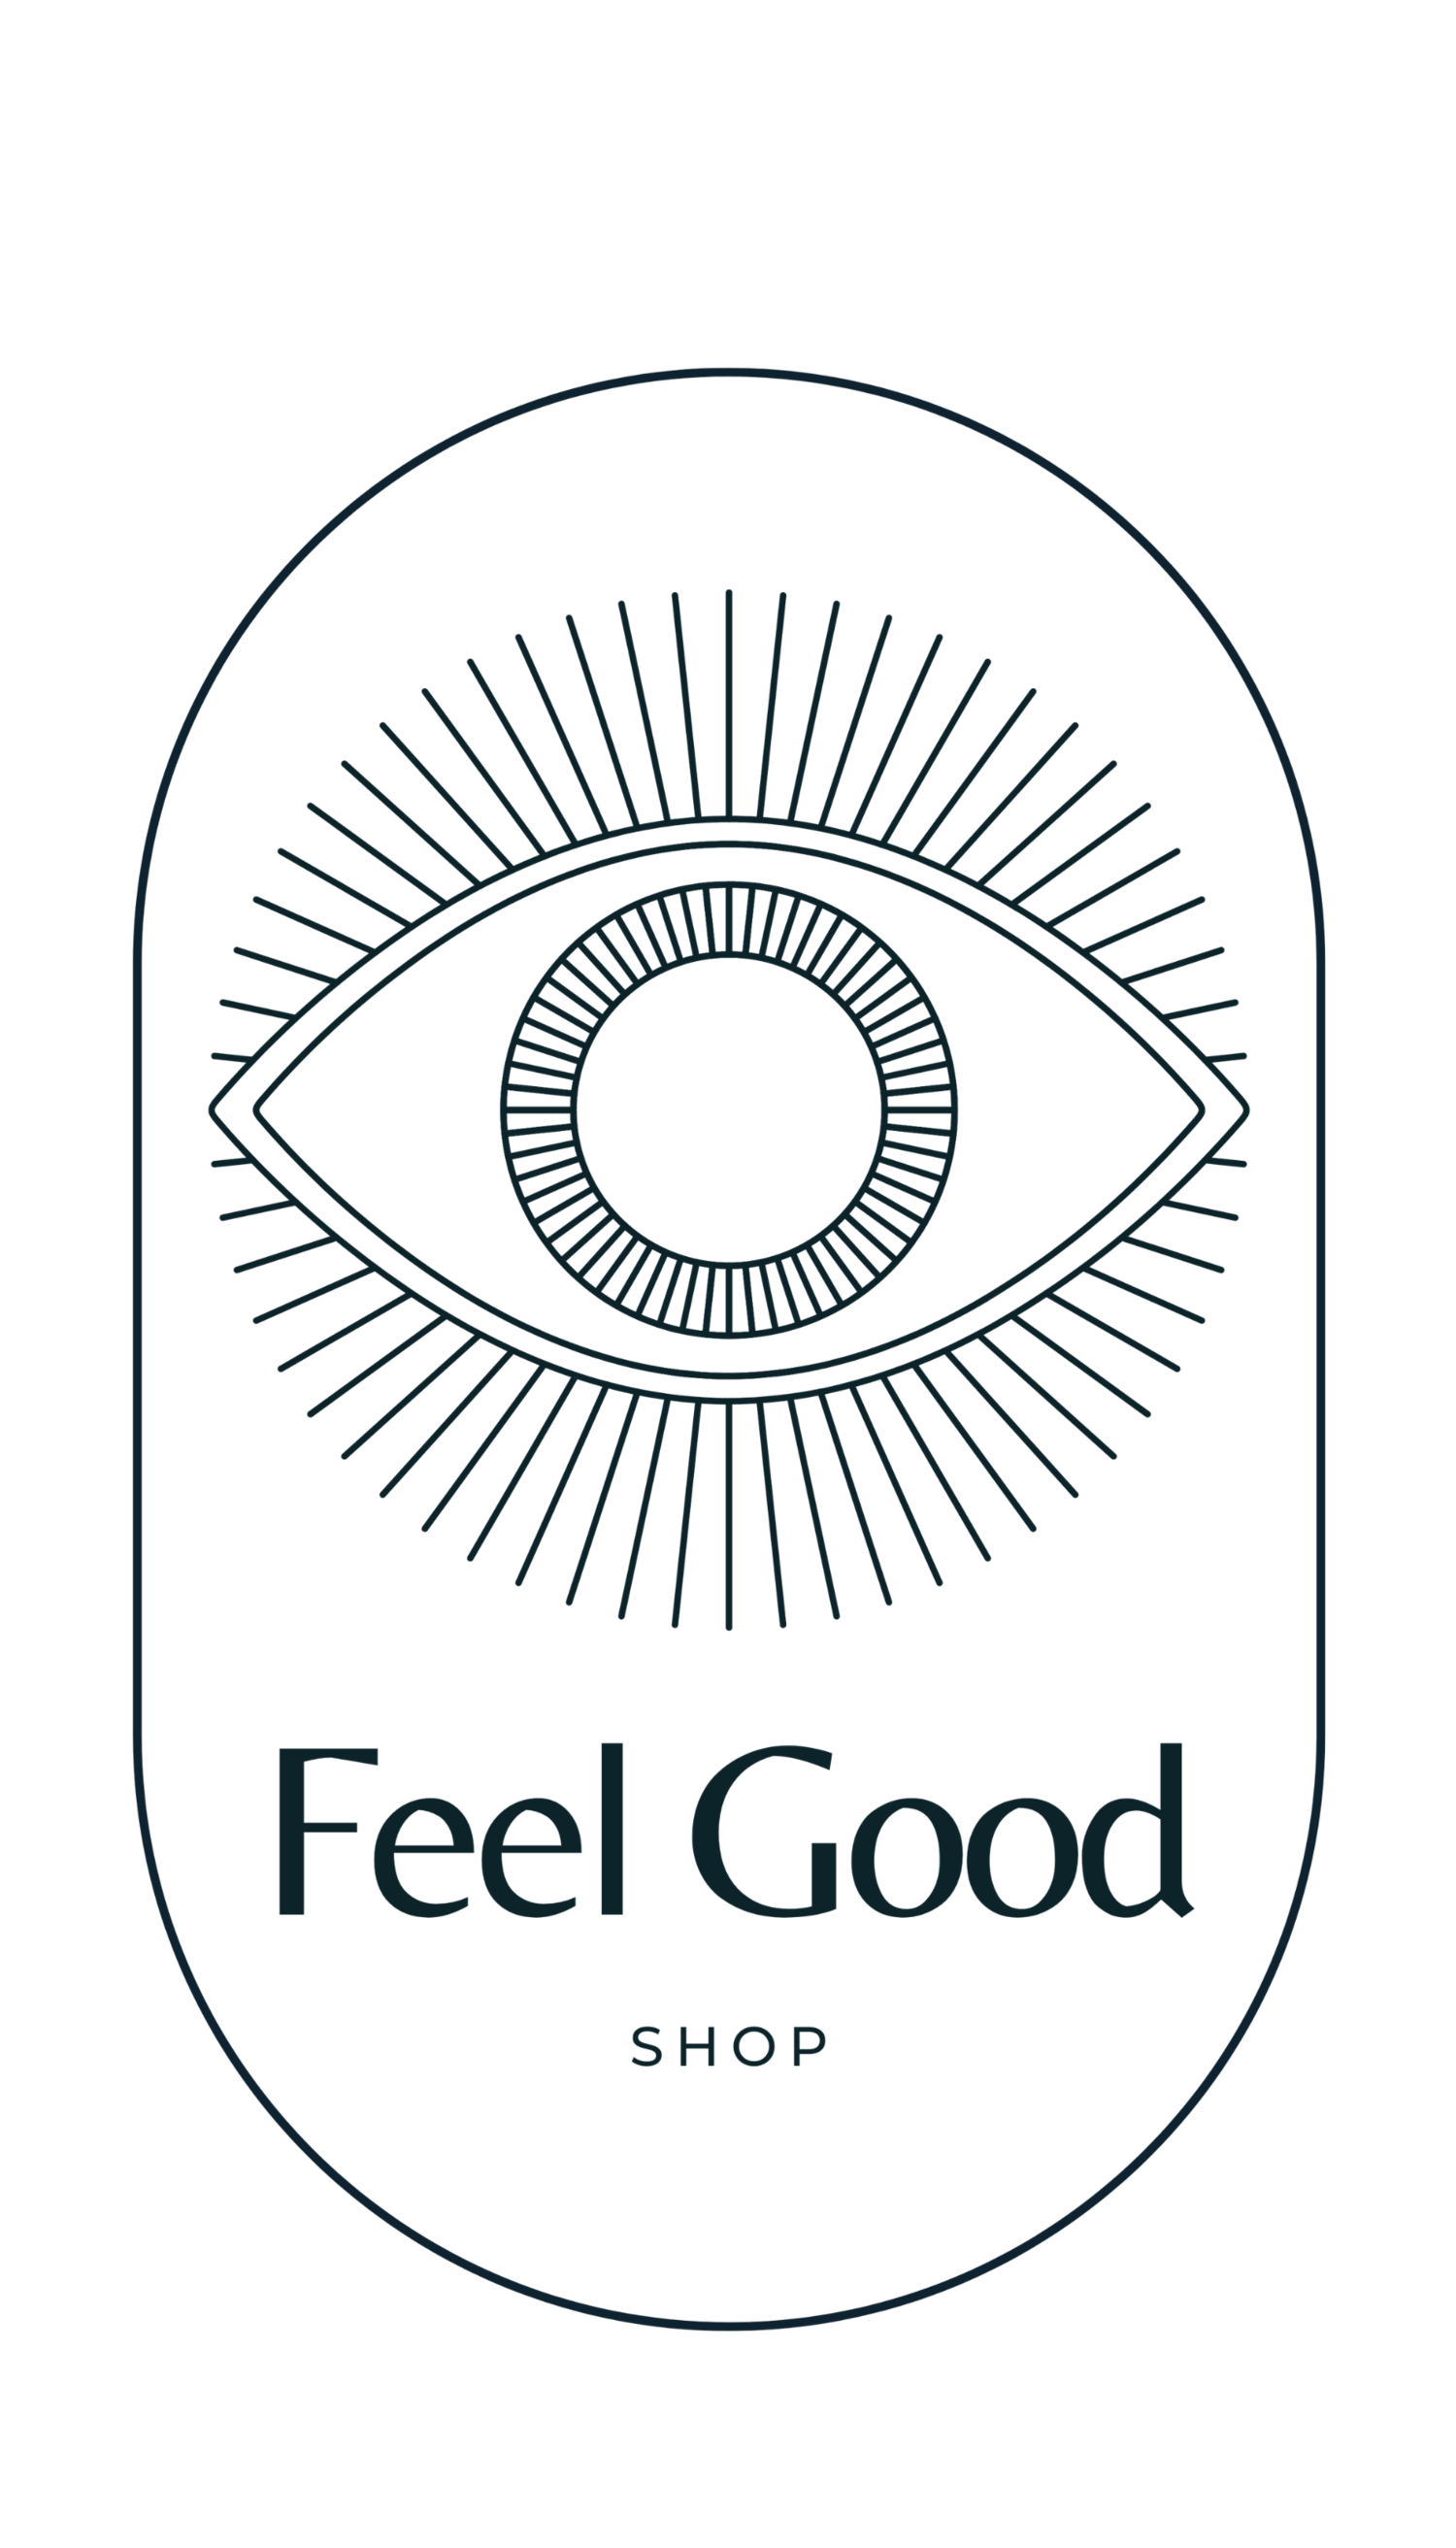 Feel Good Shop logo